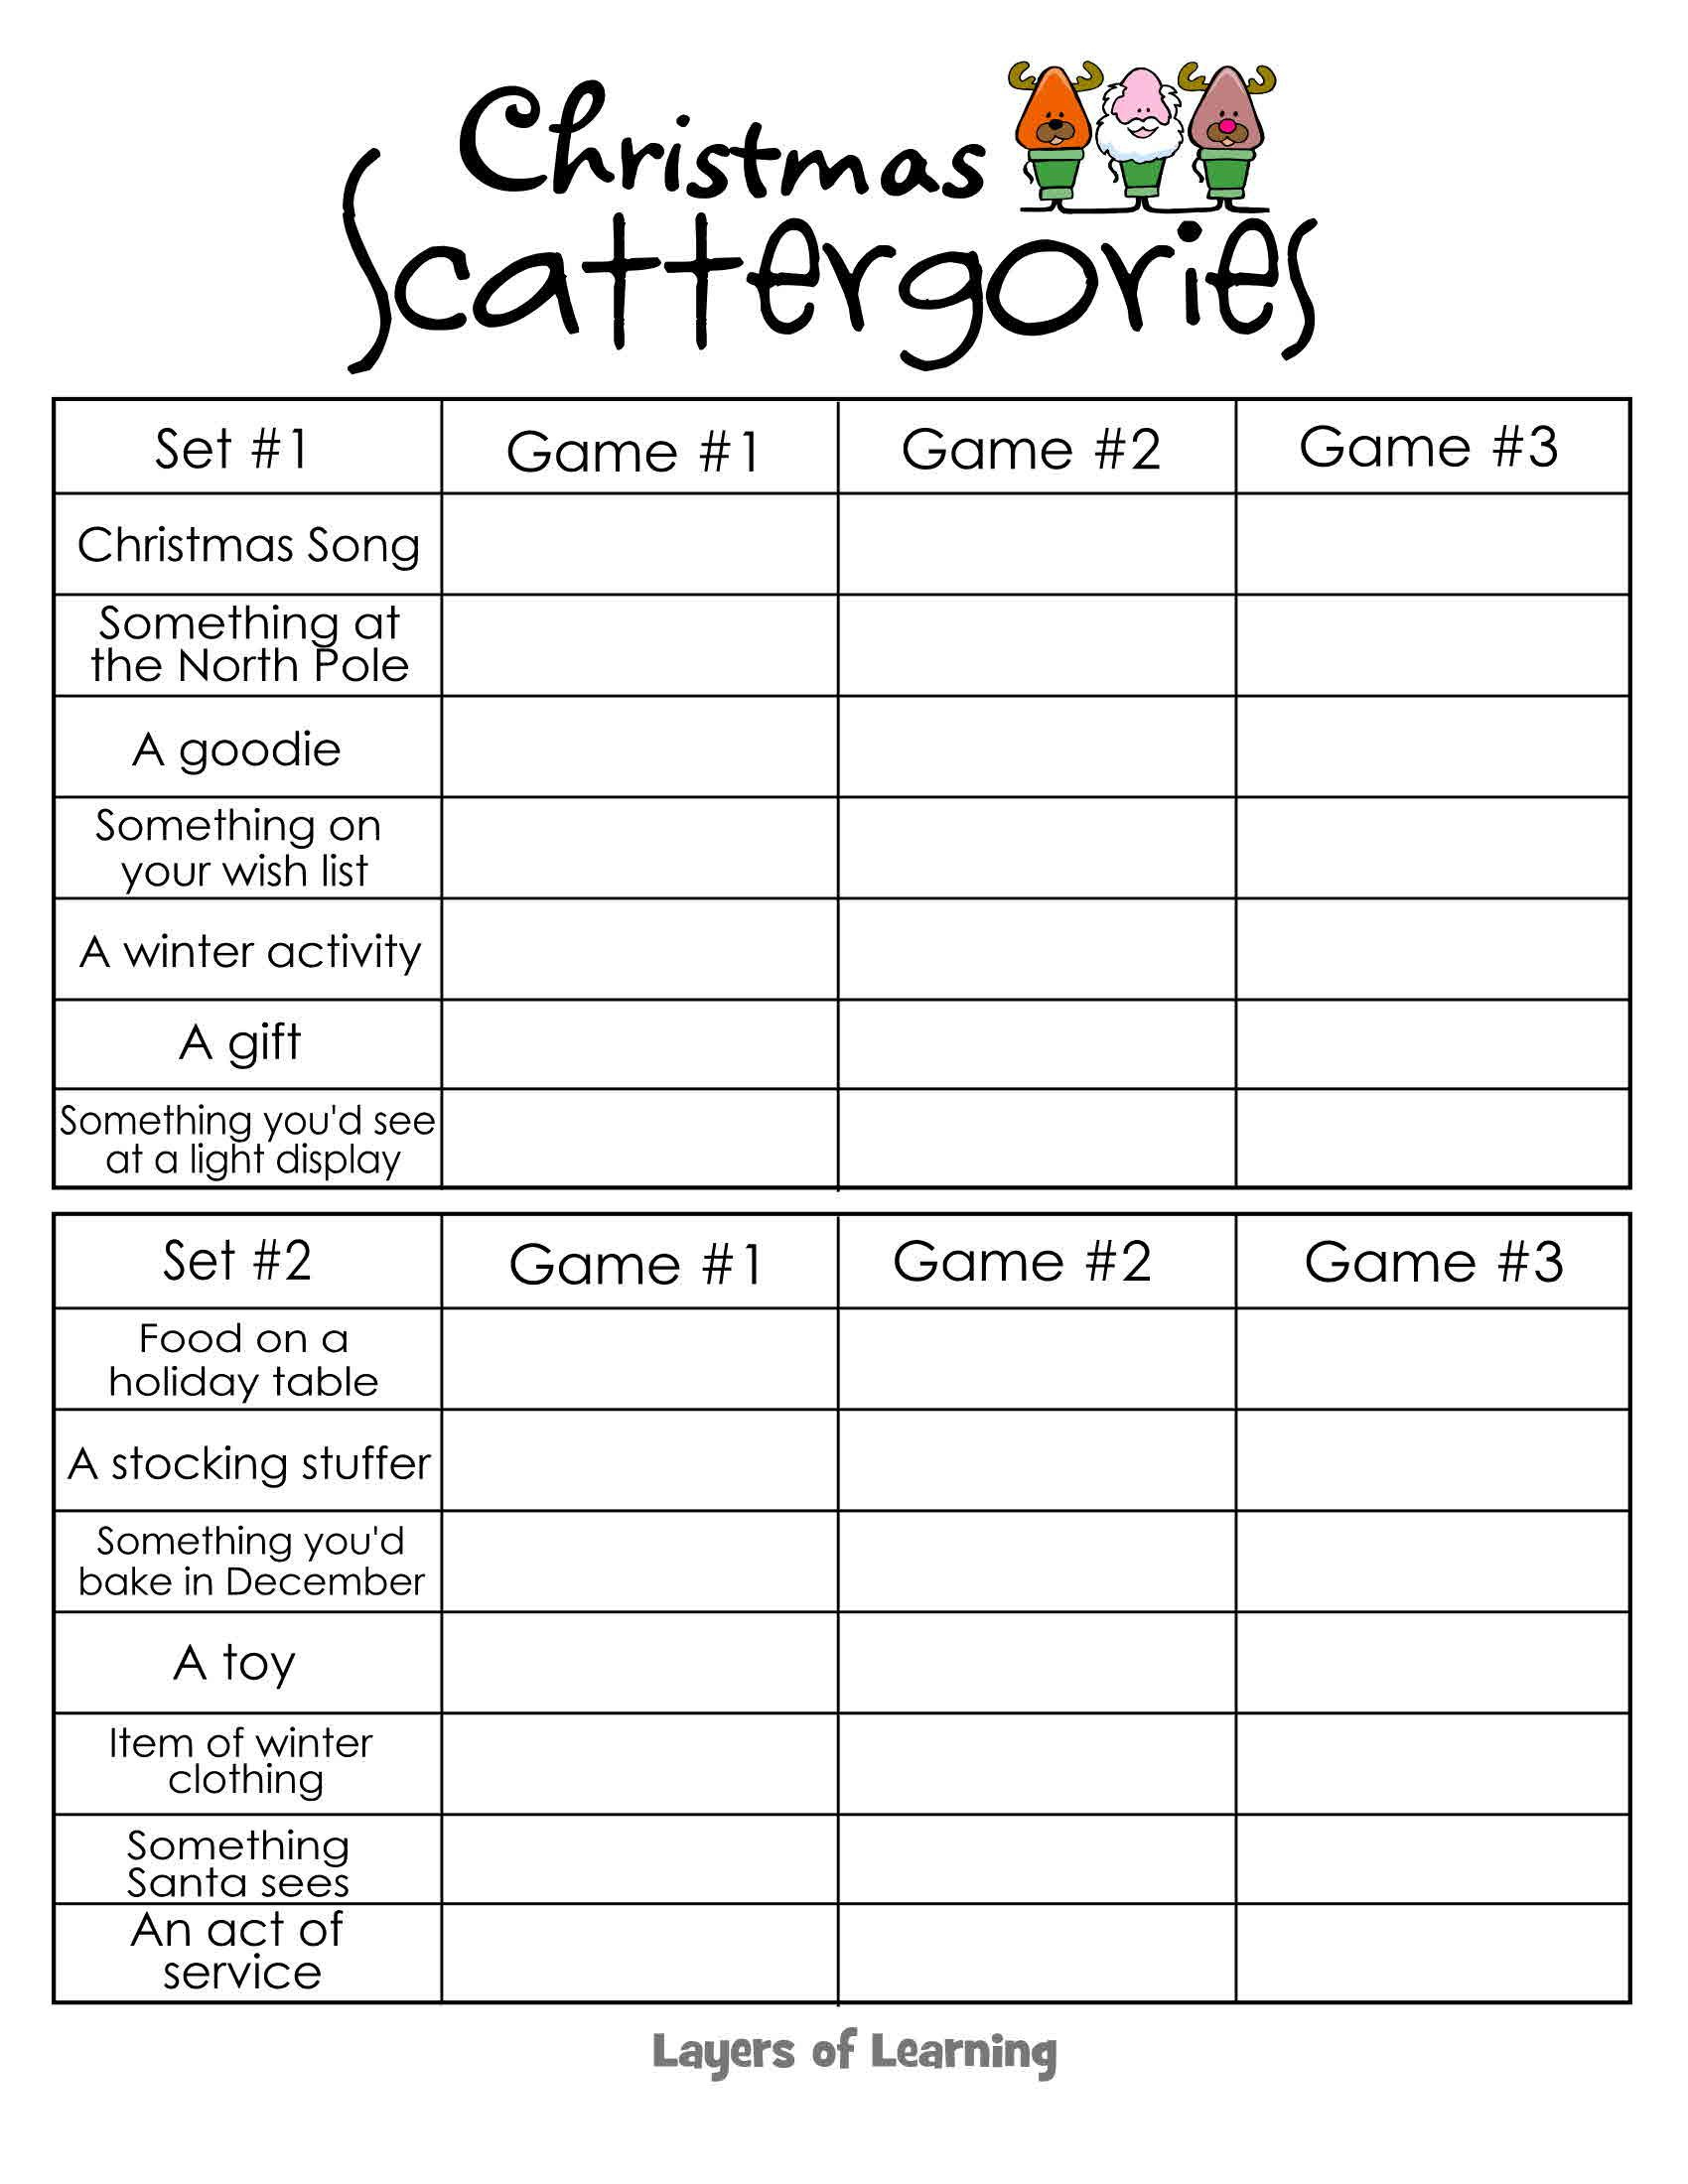 Christmas Scattergories | Homeschool Holidayopedia | Pinterest - Scattergories Free Printable Sheets